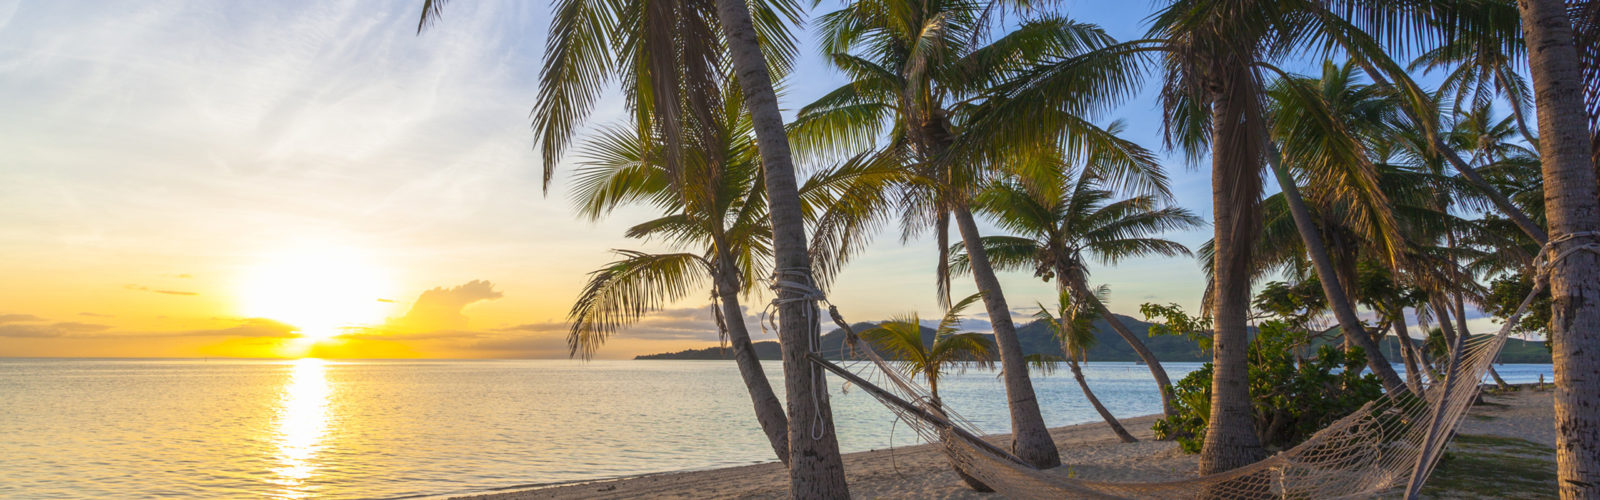 fiji-sunset-palm-trees